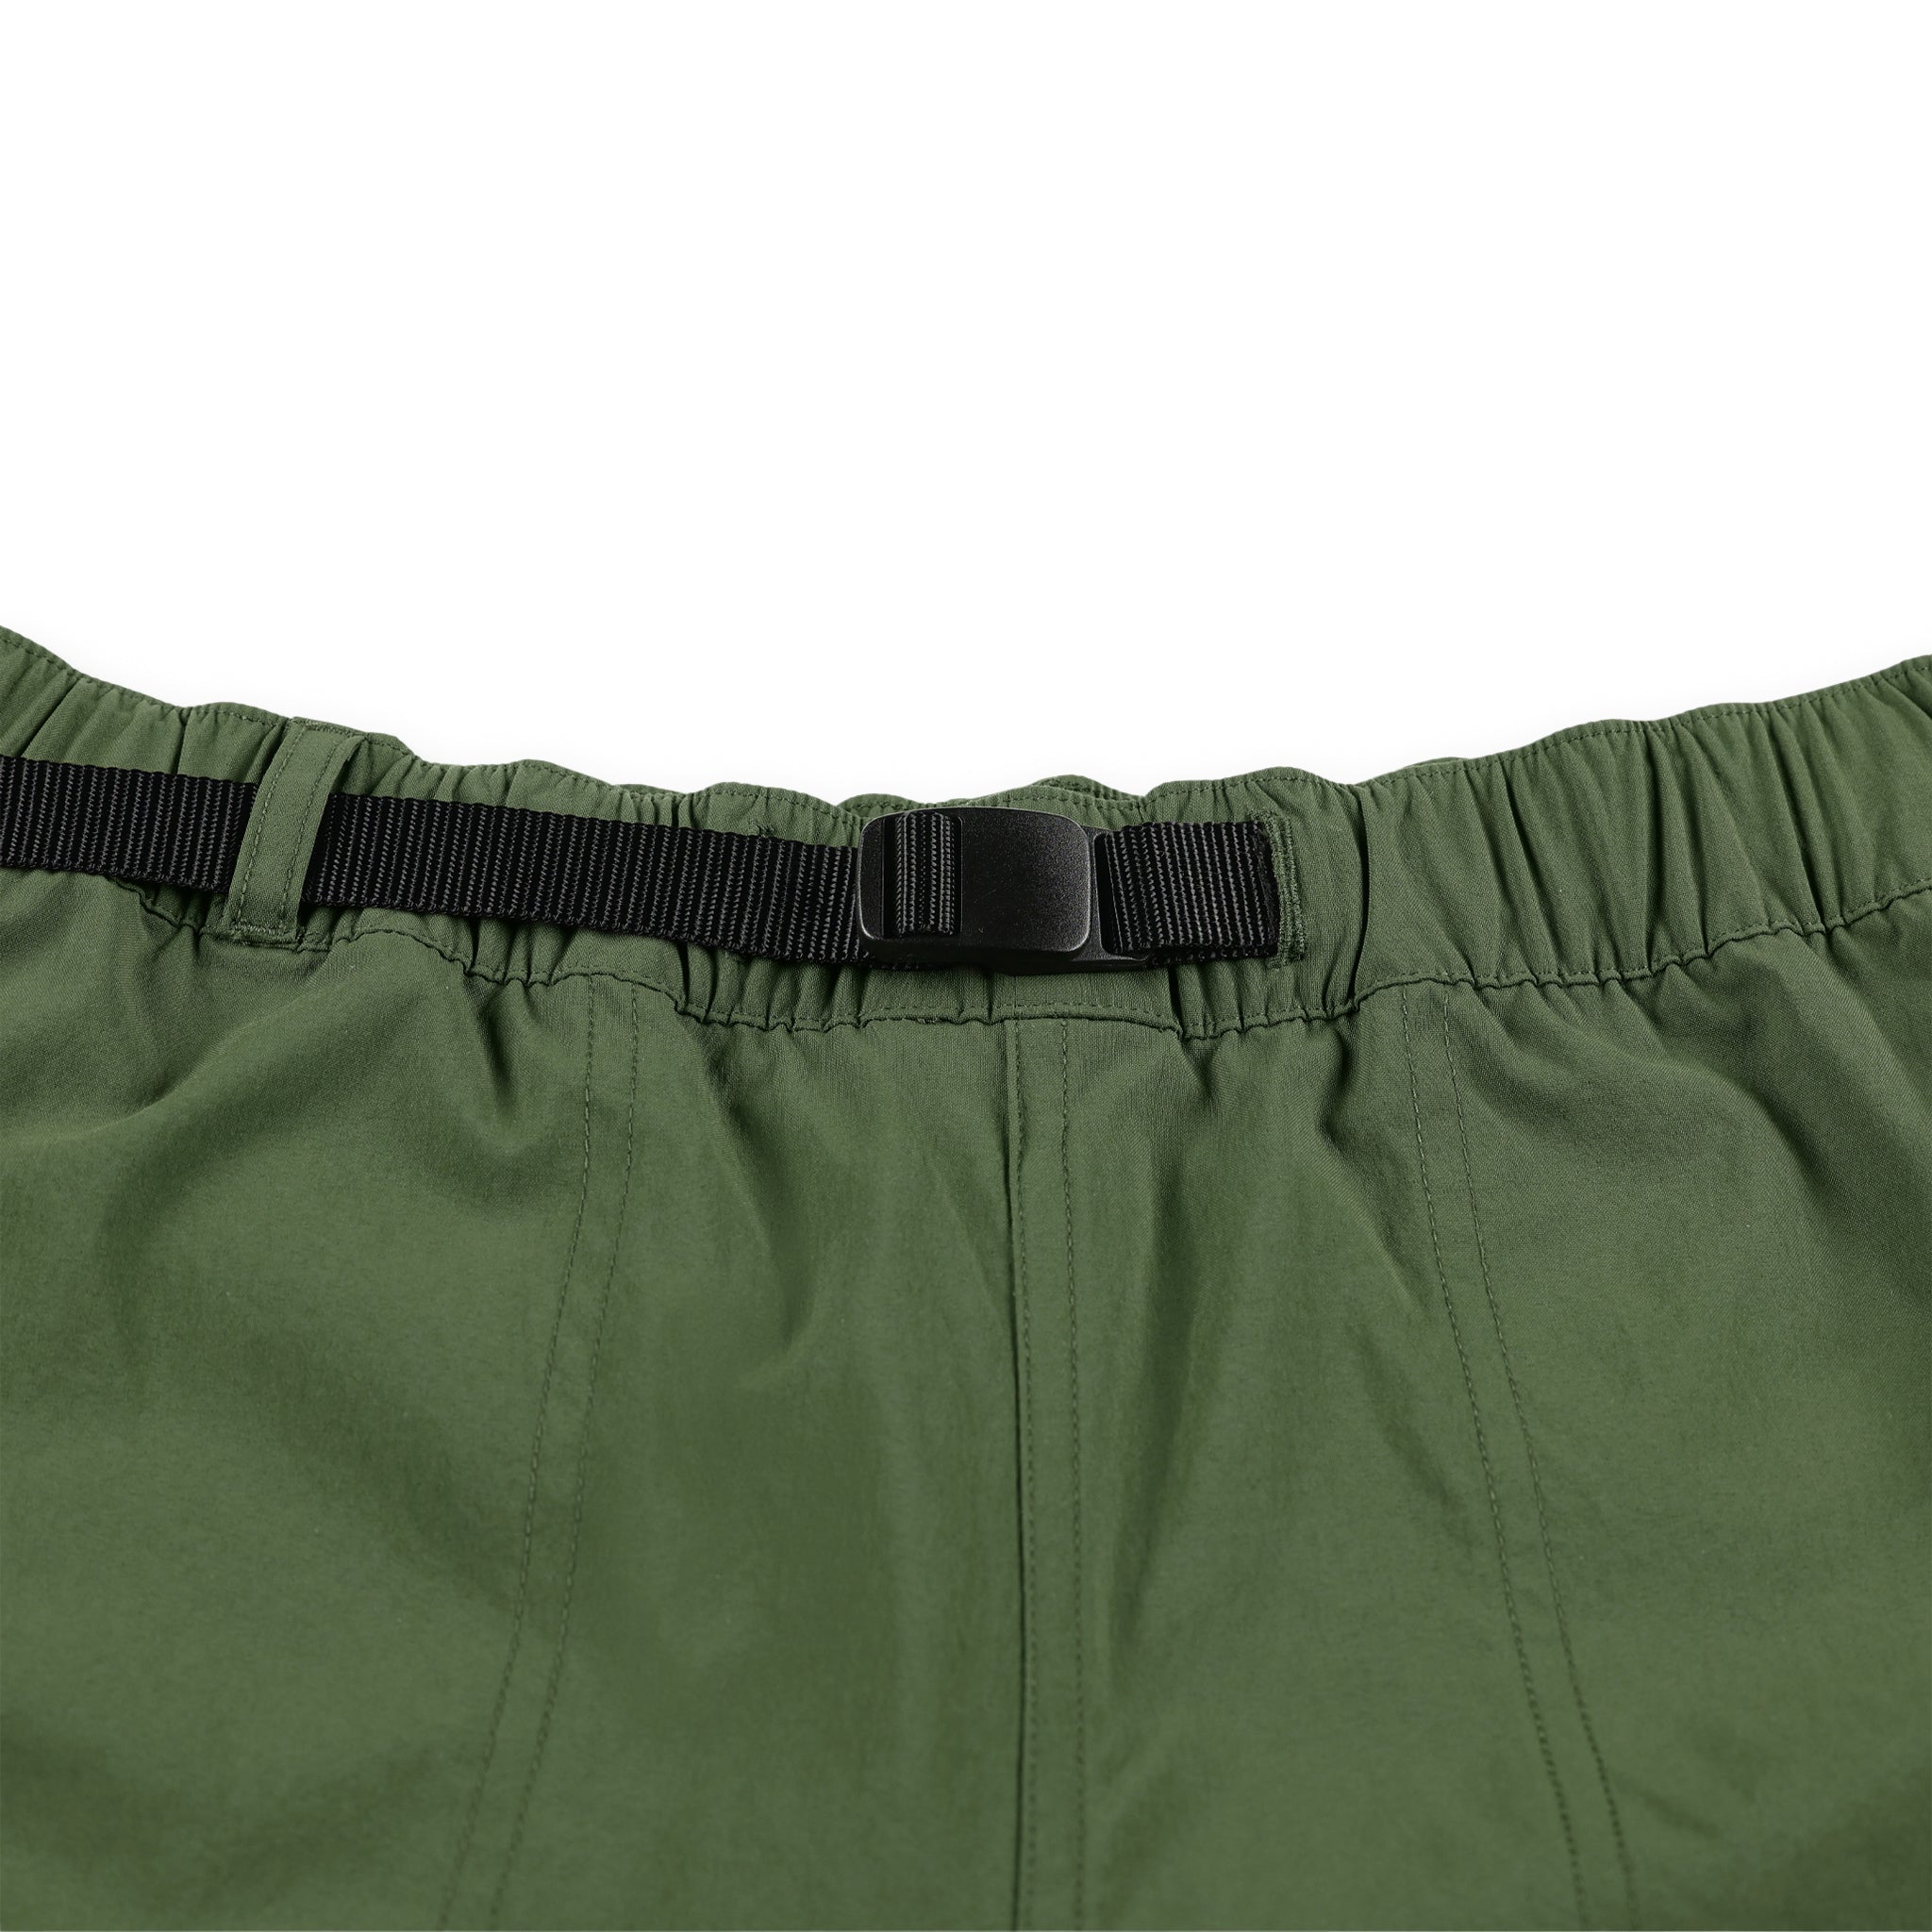 General shot of web belt on Topo Designs Men's River quick-dry swim Shorts in olive green.